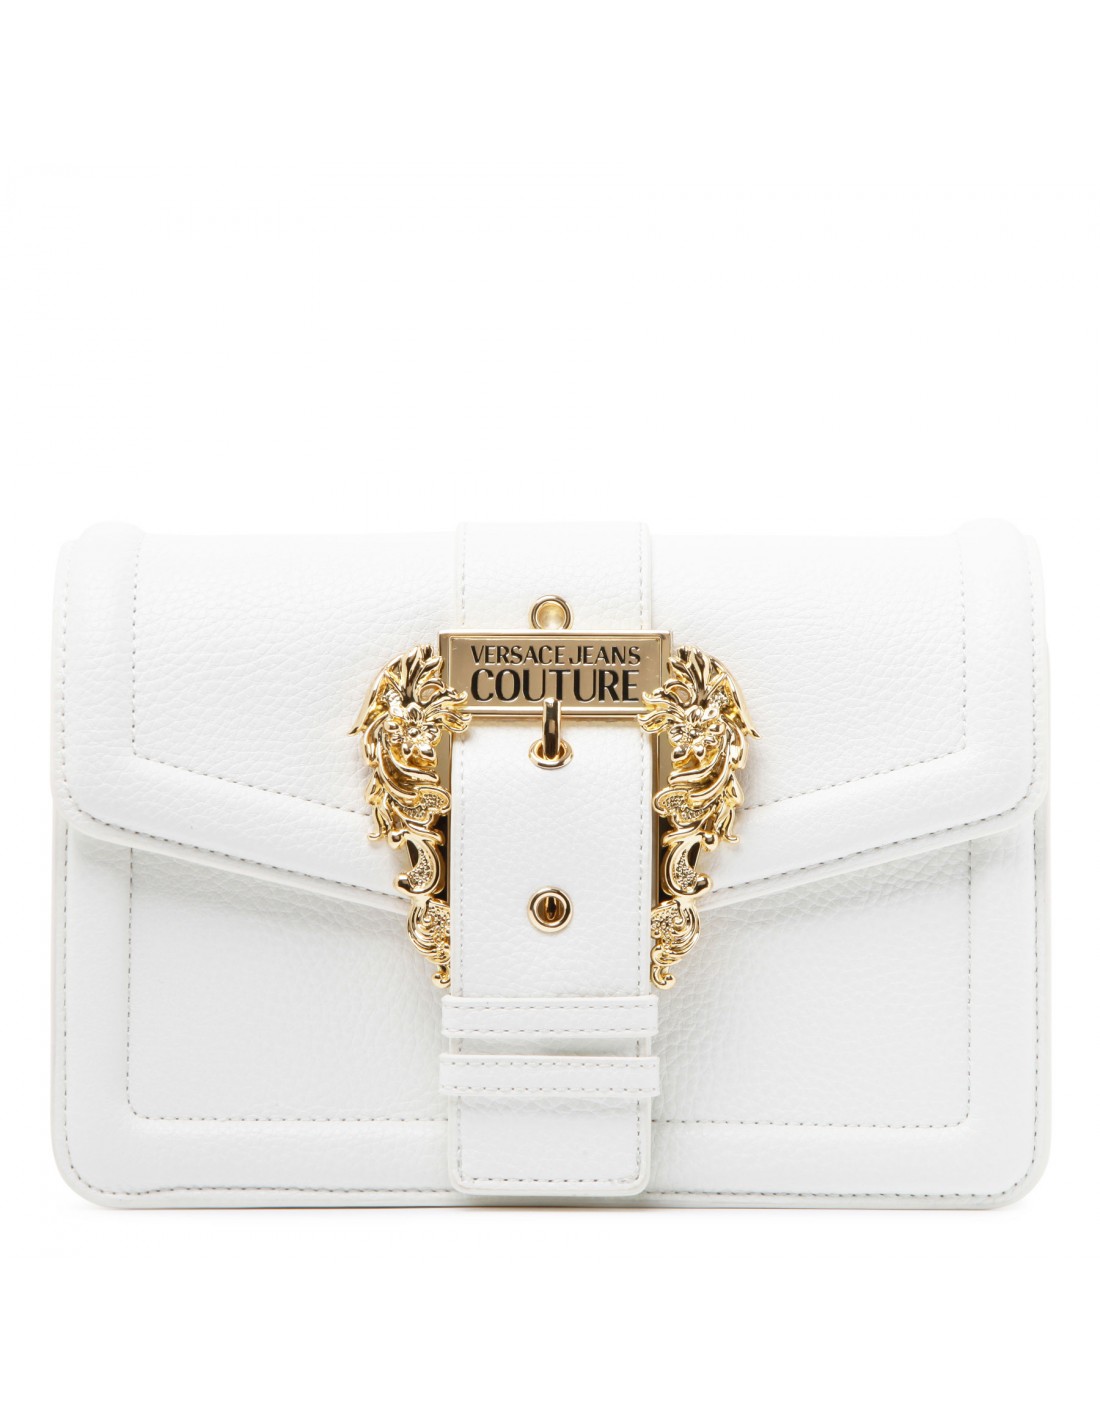 Couture 1 white shoulder bag